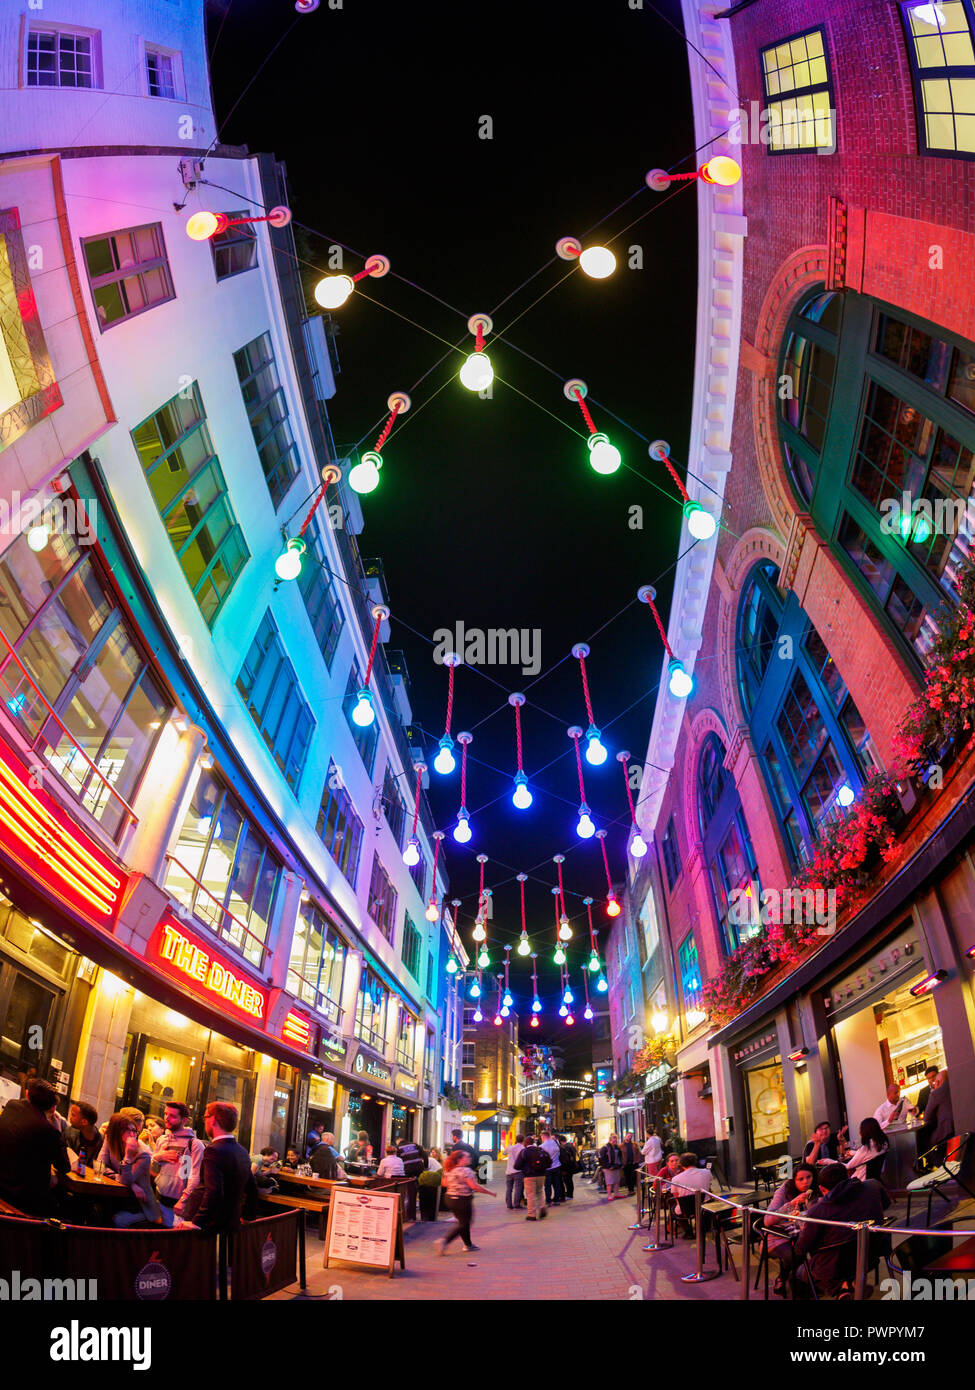 Artwork light feature Ganton Street Soho London W1 Stock Photo